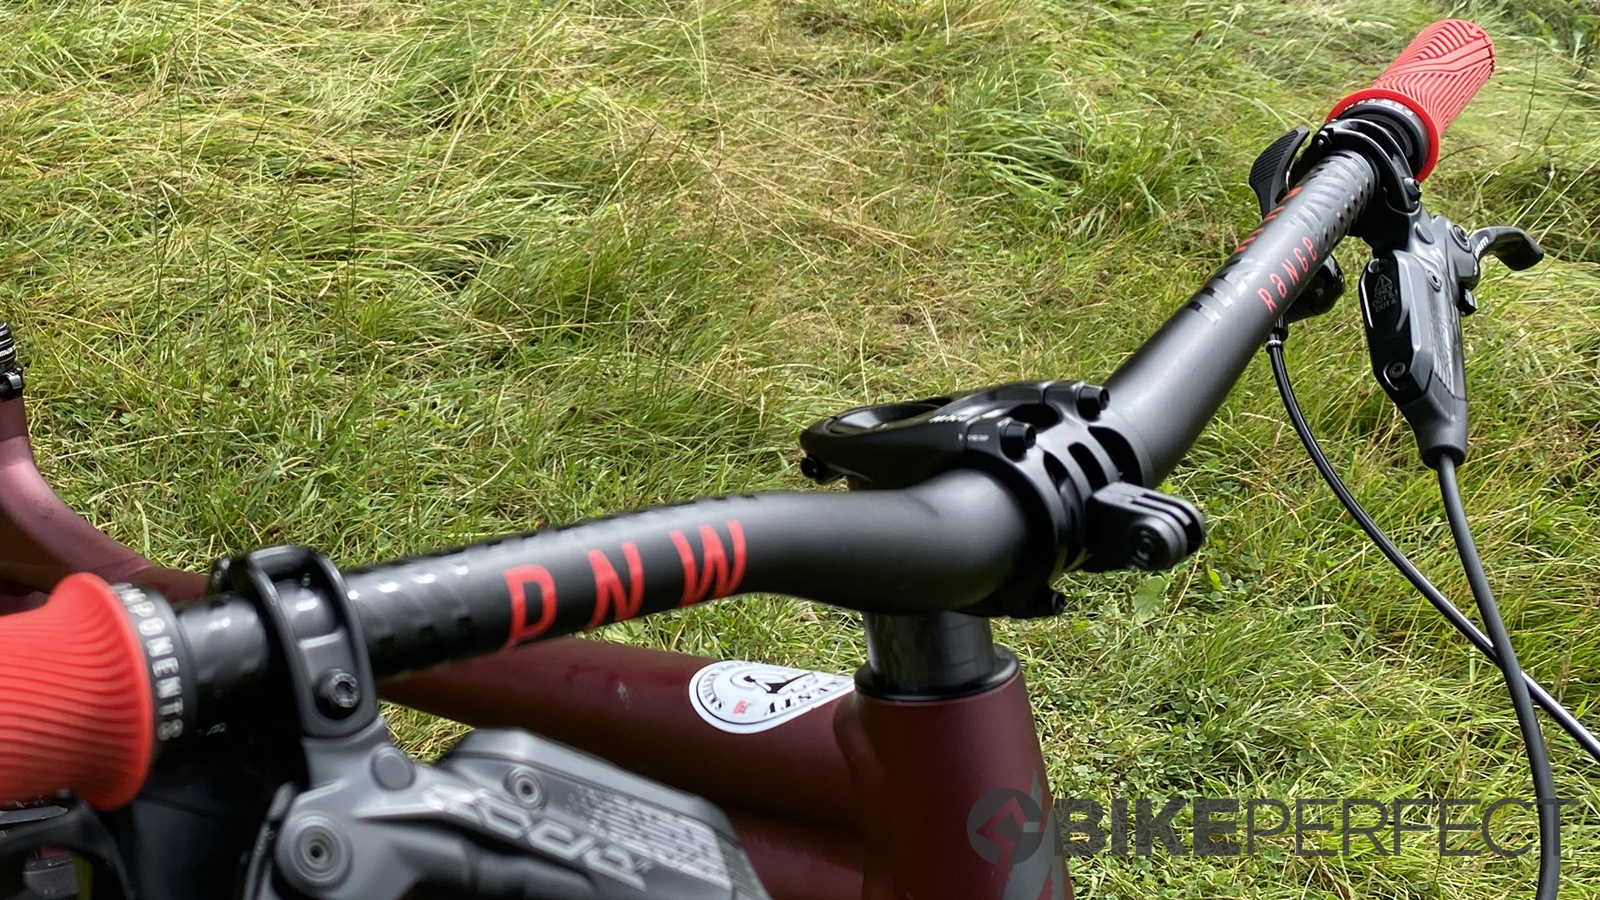 Pnw Components Range Handlebar Stem And Loam Grip Review Bike Perfect